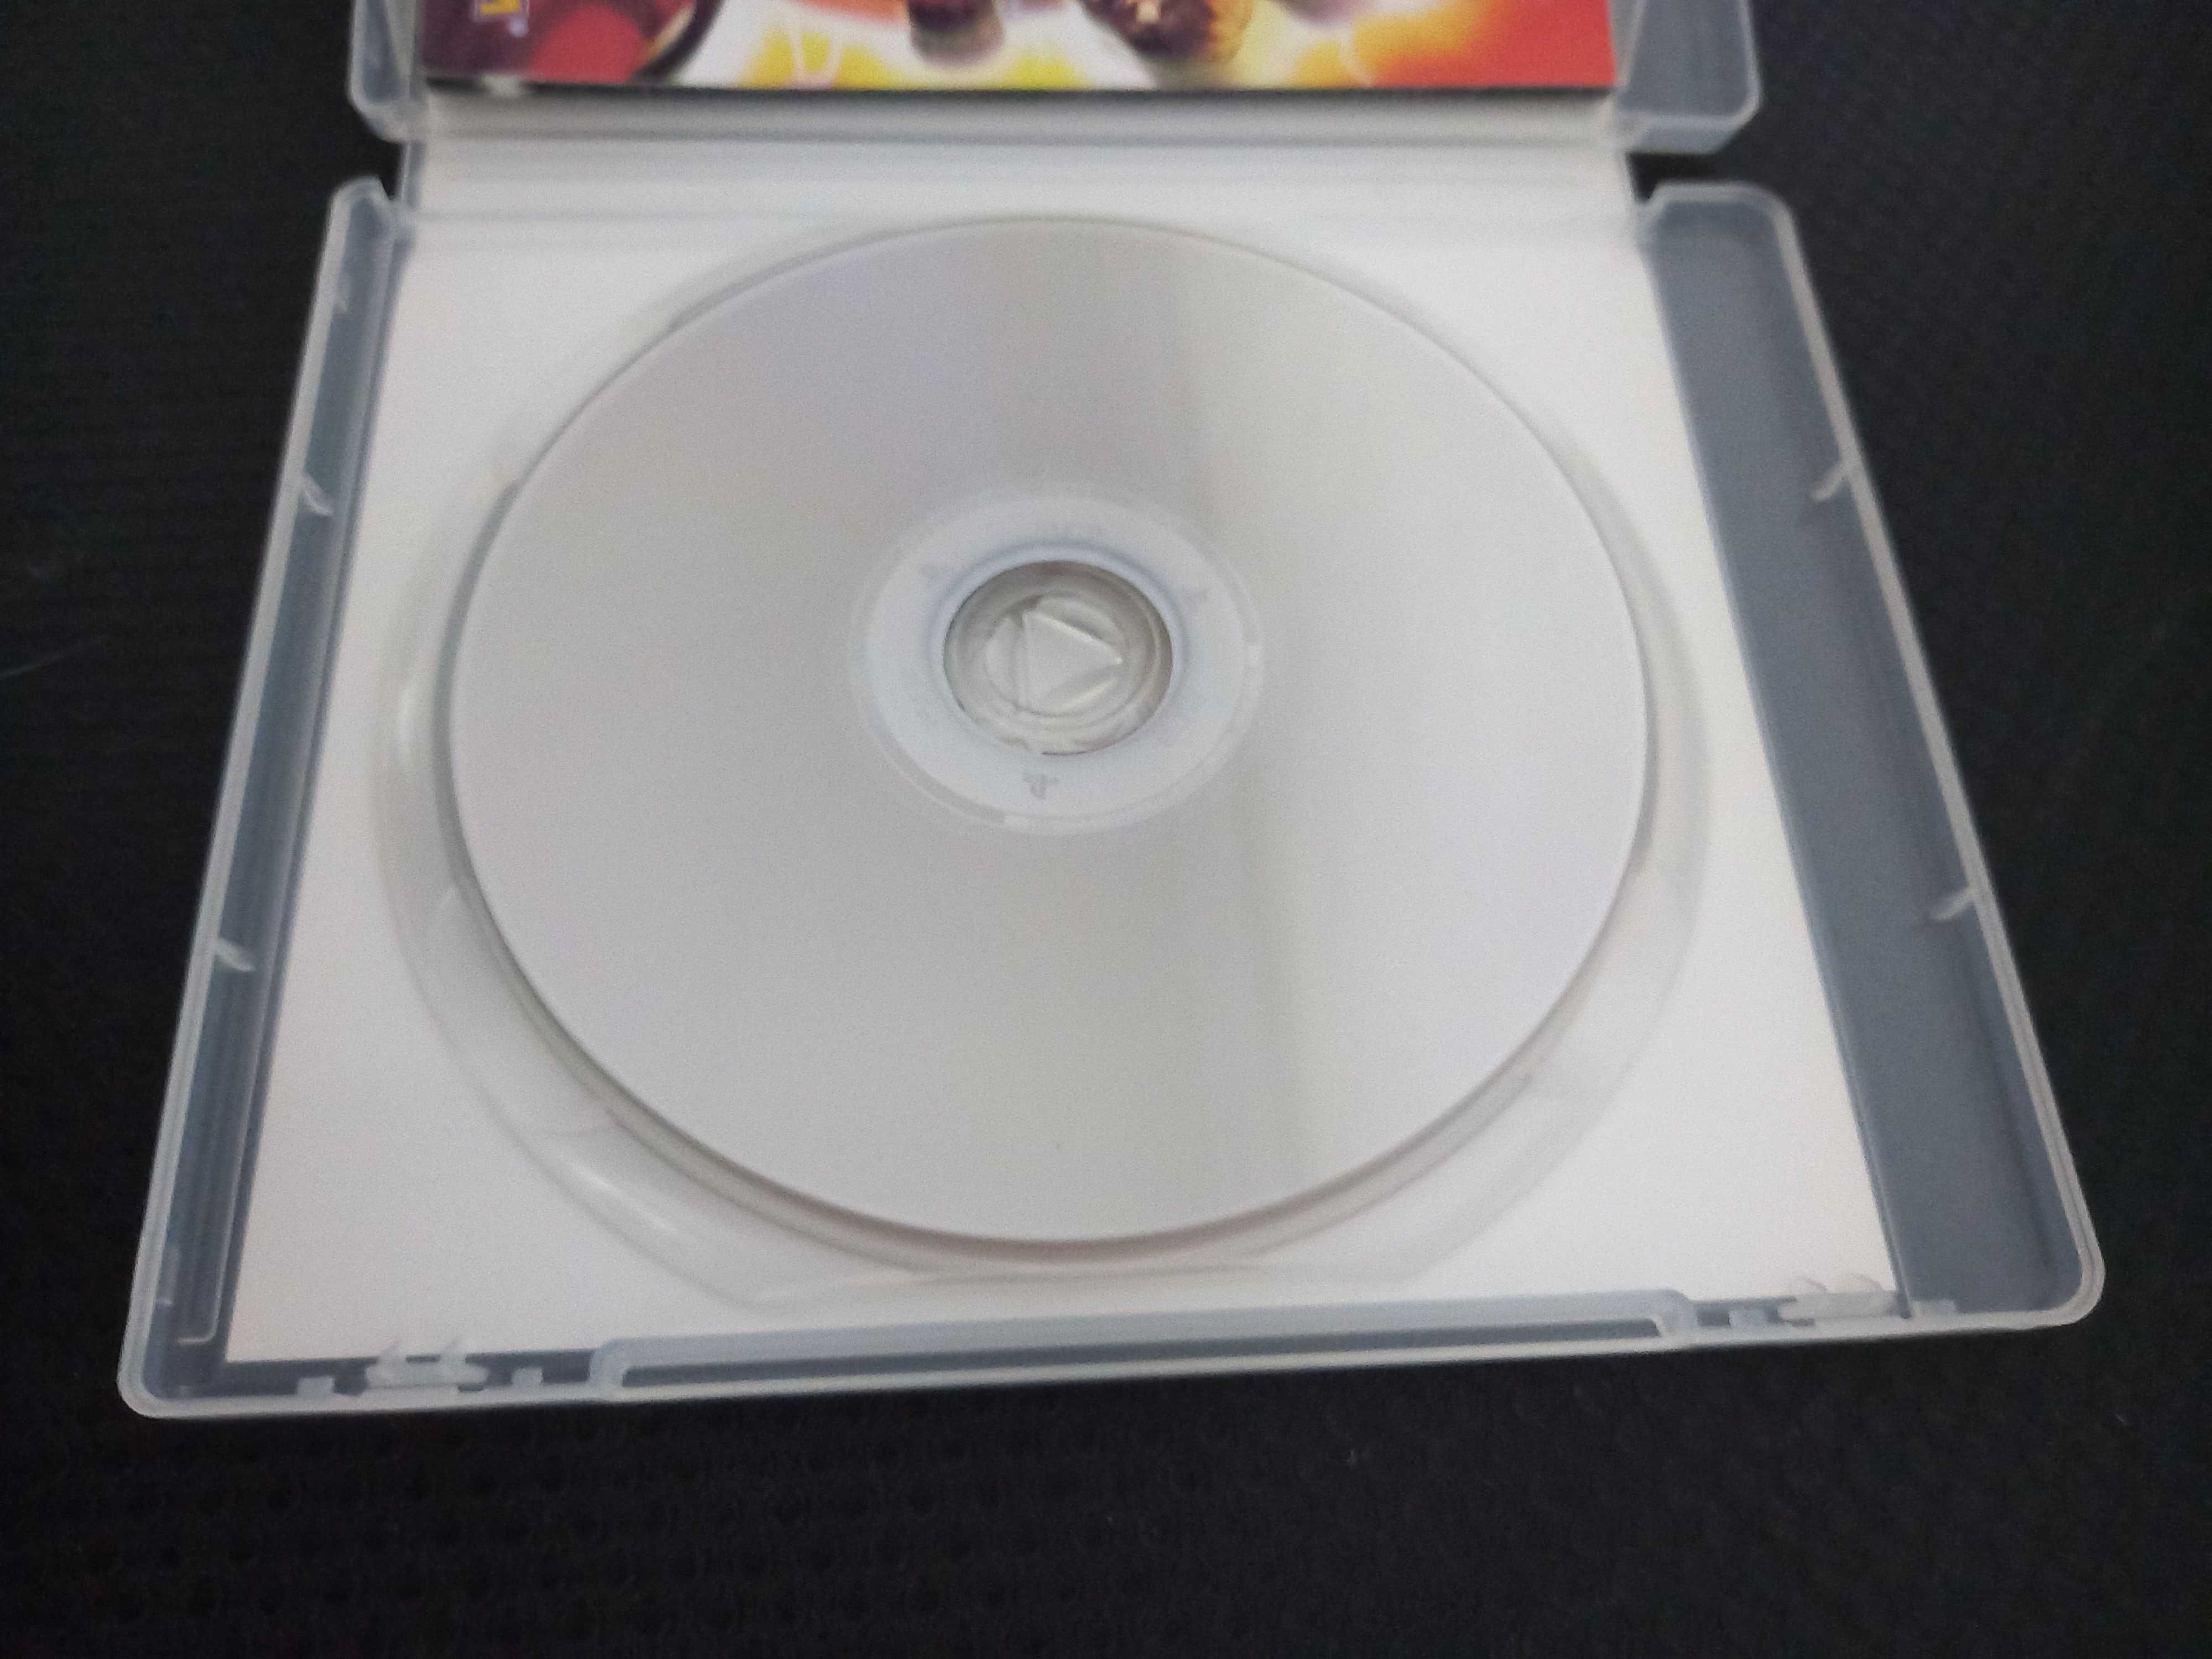 Super Street Fighter IV Playstation3 PS3